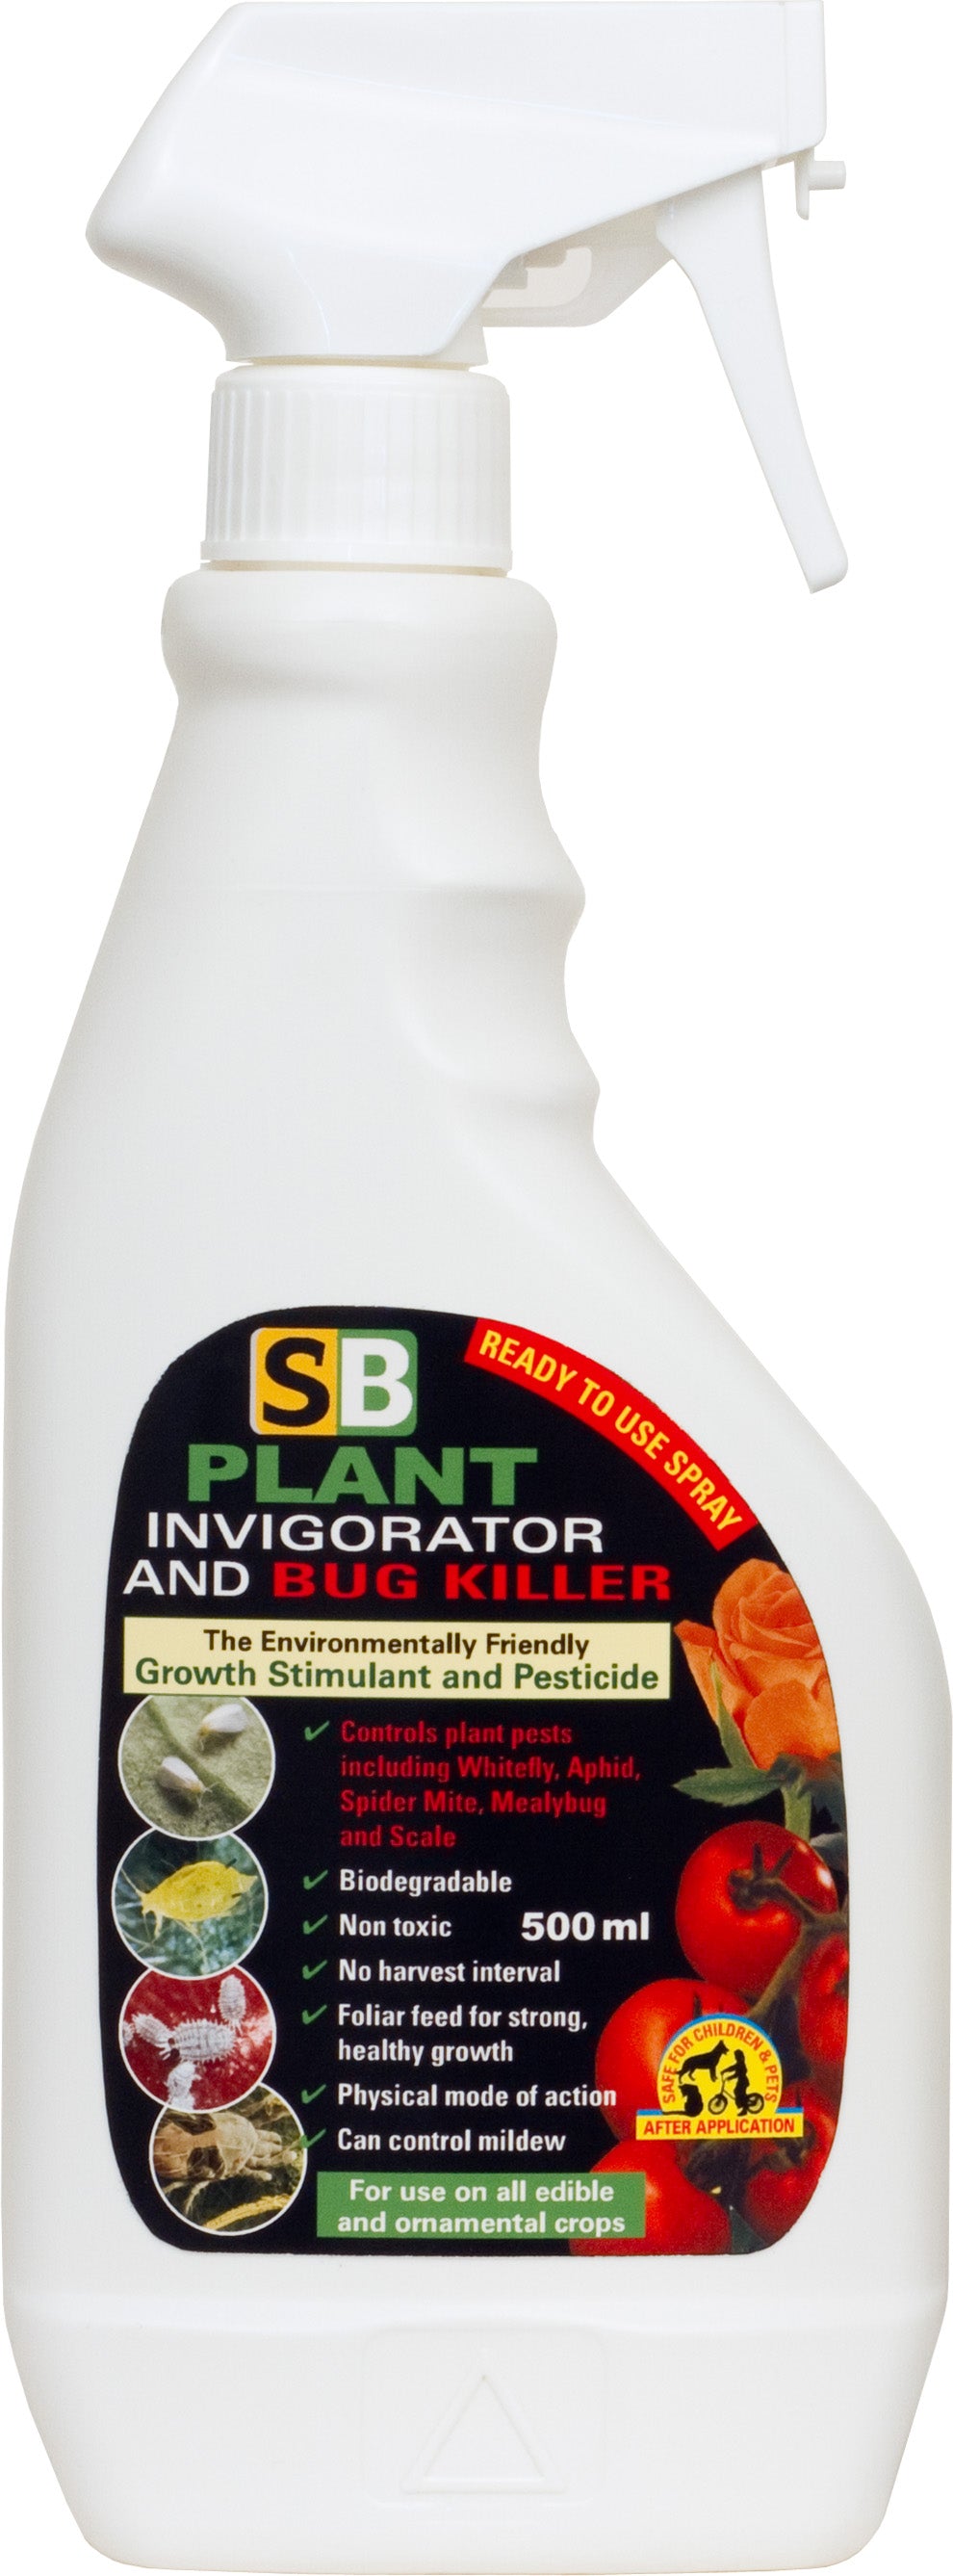 SB Plant Invigorator - Pest control 500ml RTU spray bottle